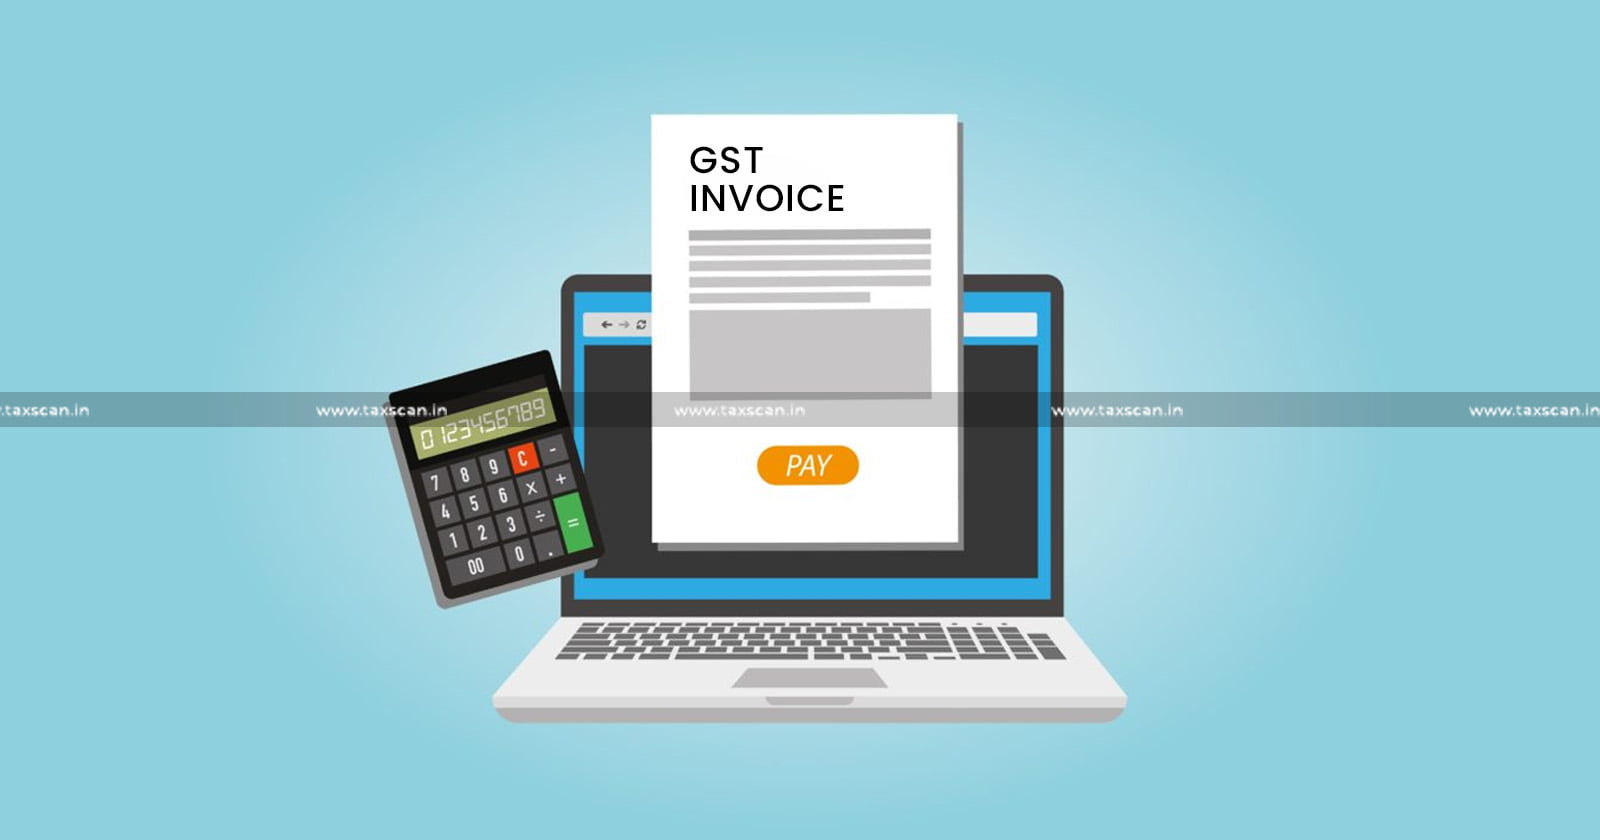 GSTN -advisory - GST invoice - GST - GST Invoice reporting - invoice reporting - time limit - Credit - Debit - Credit notes - Debit notes - Taxscan